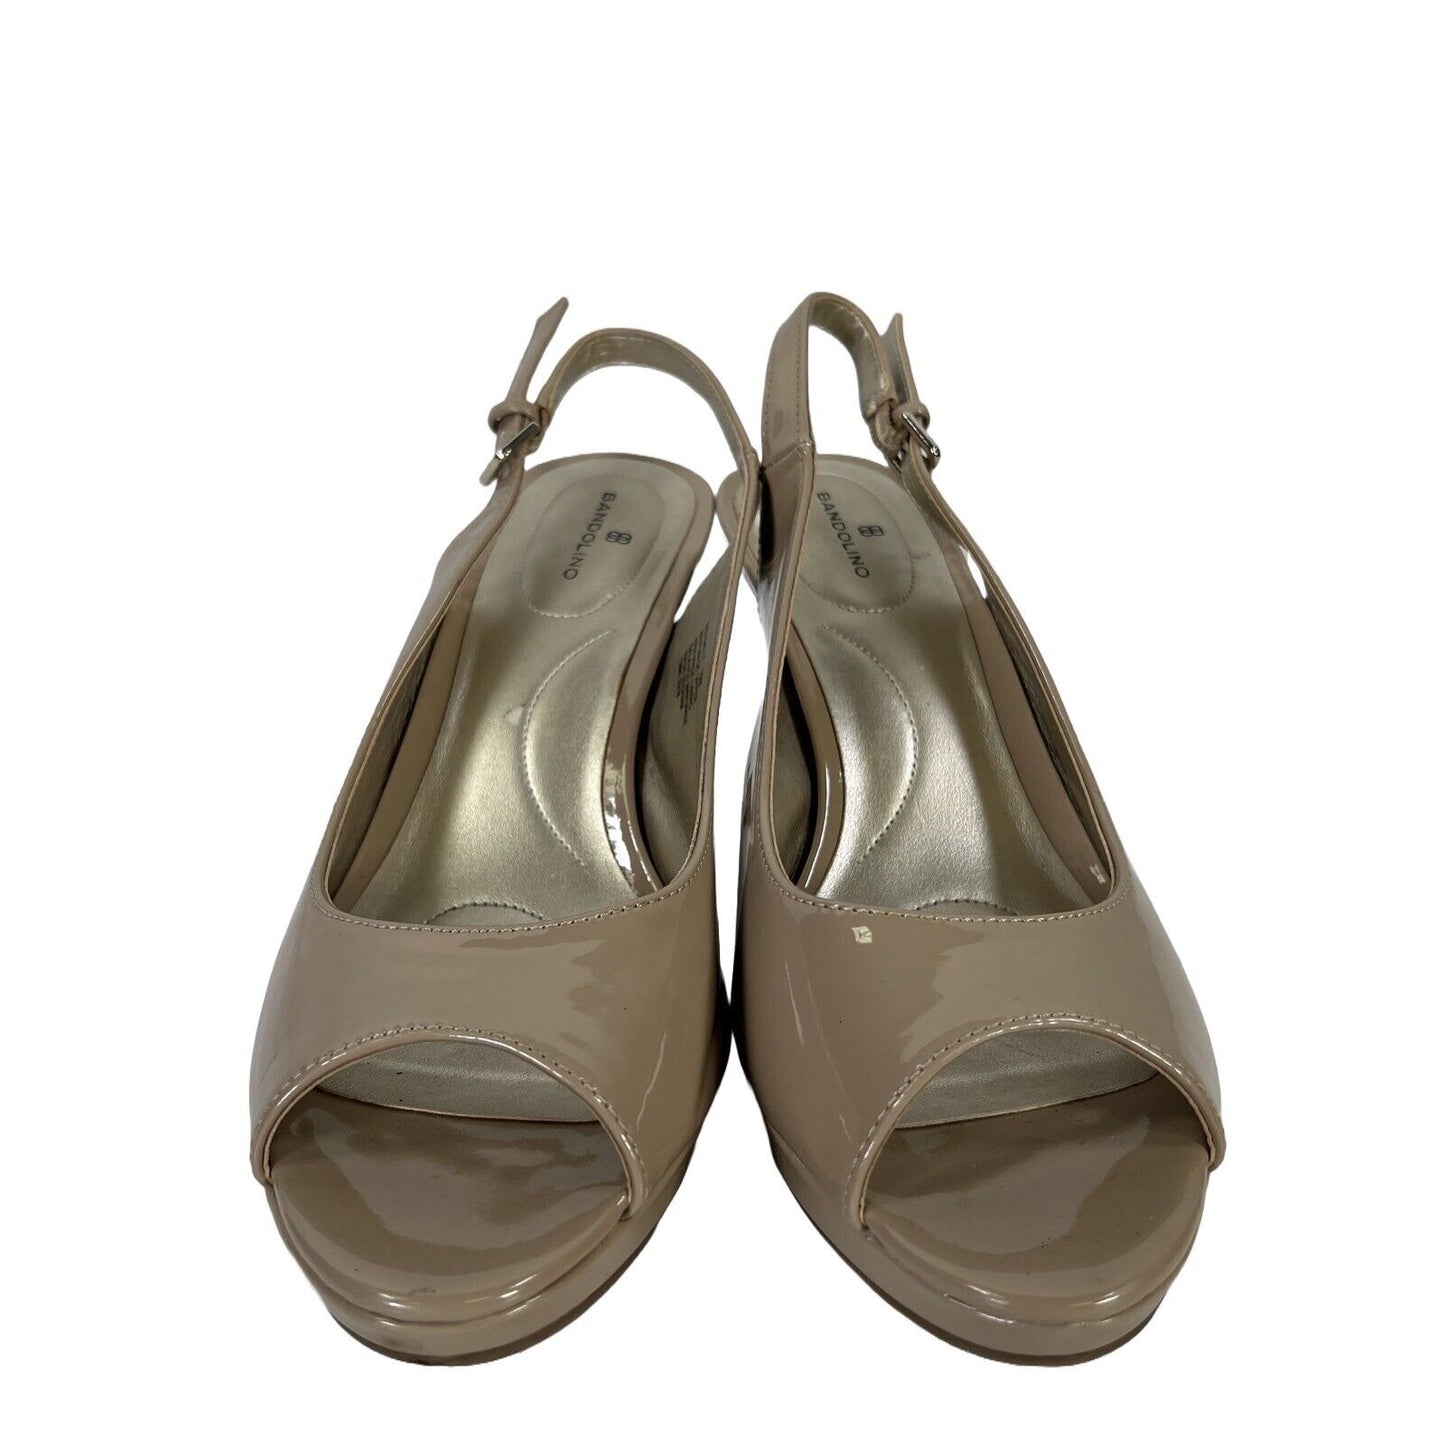 Bandolino Women's Beige Synthetic Patent Open Toe Heels - 10 M